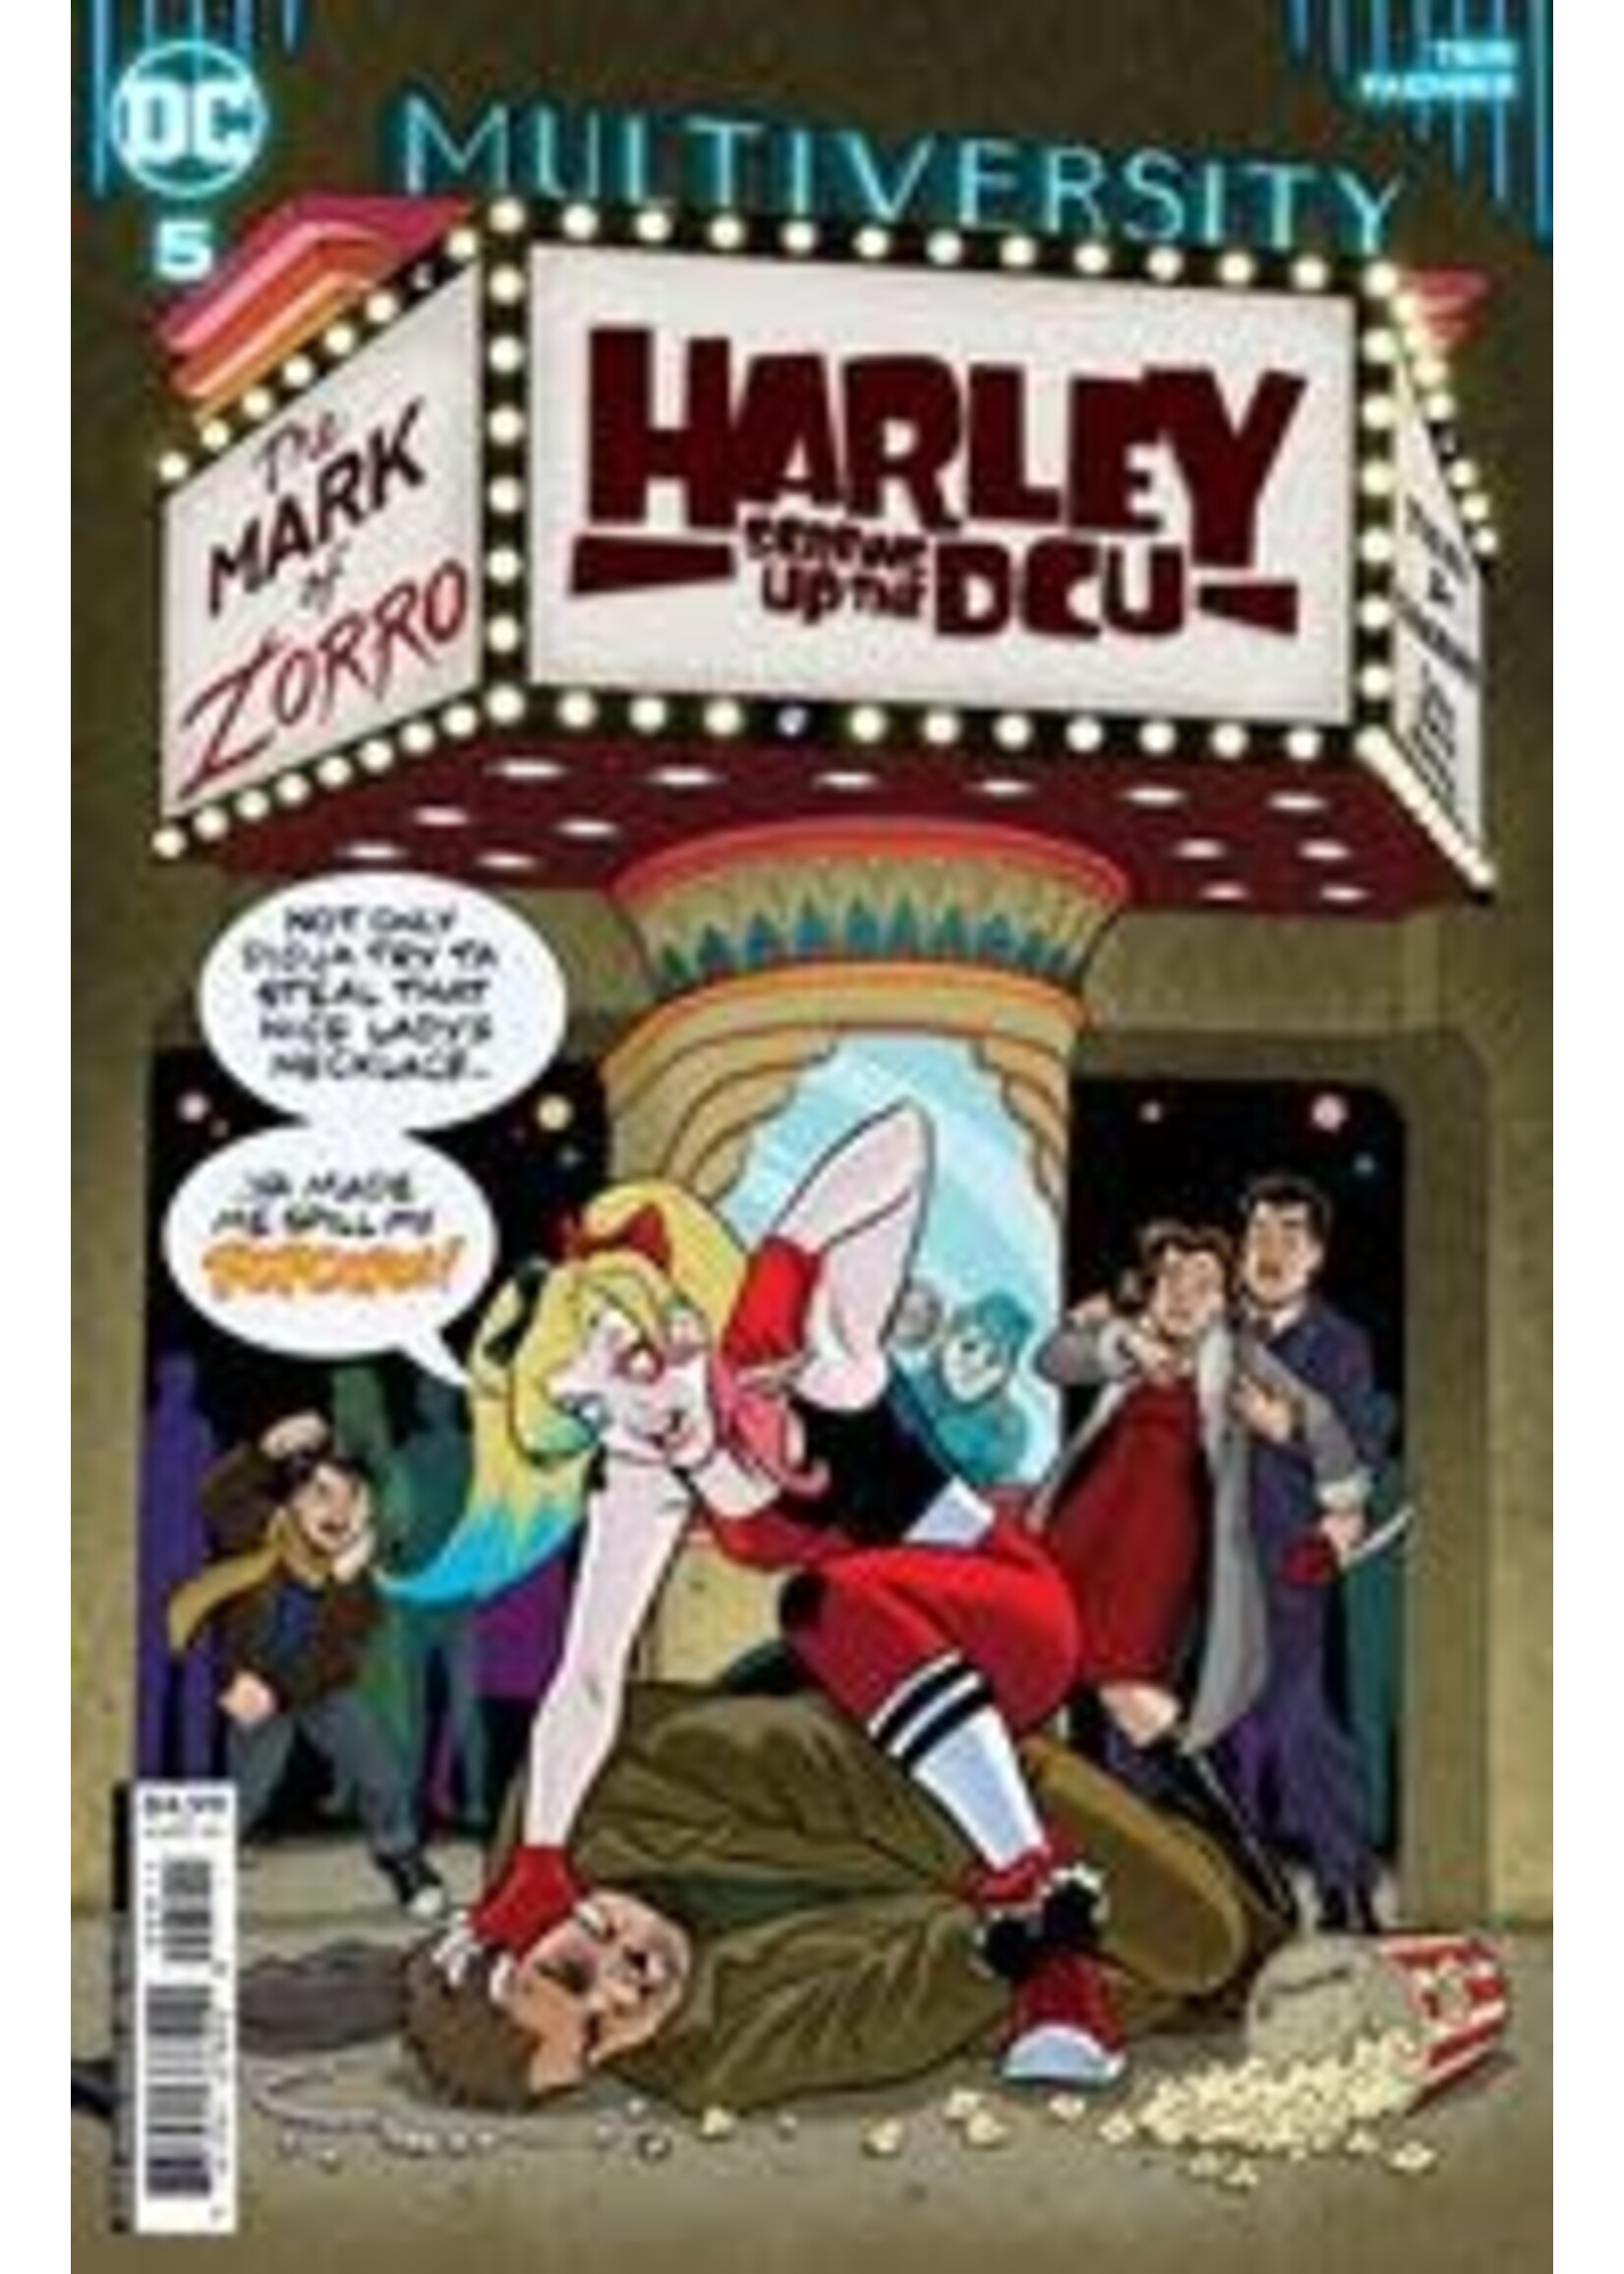 DC COMICS MULTIVERSITY HARLEY SCREWS UP THE DCU #5